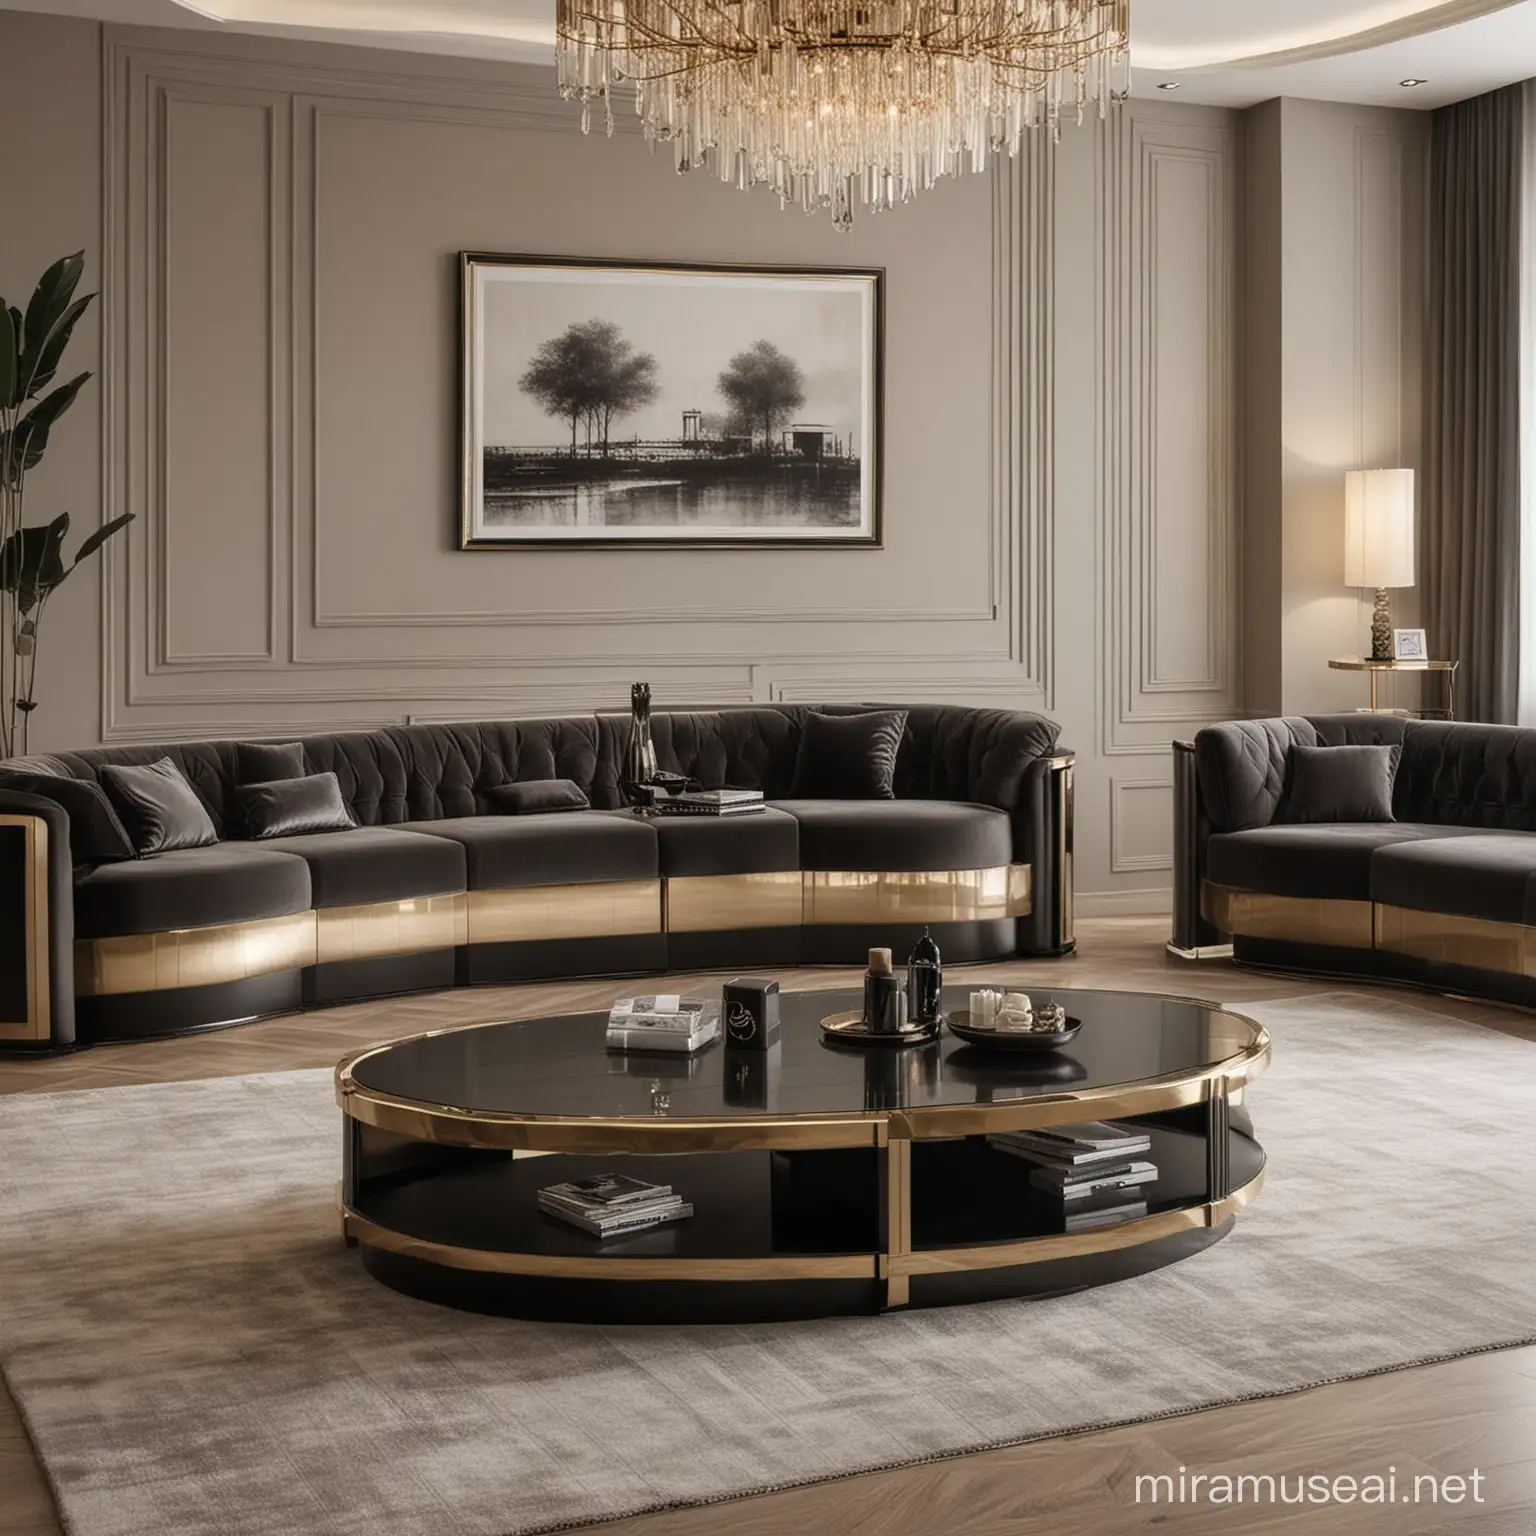 Luxury Oval Living Room Furniture Set in Black